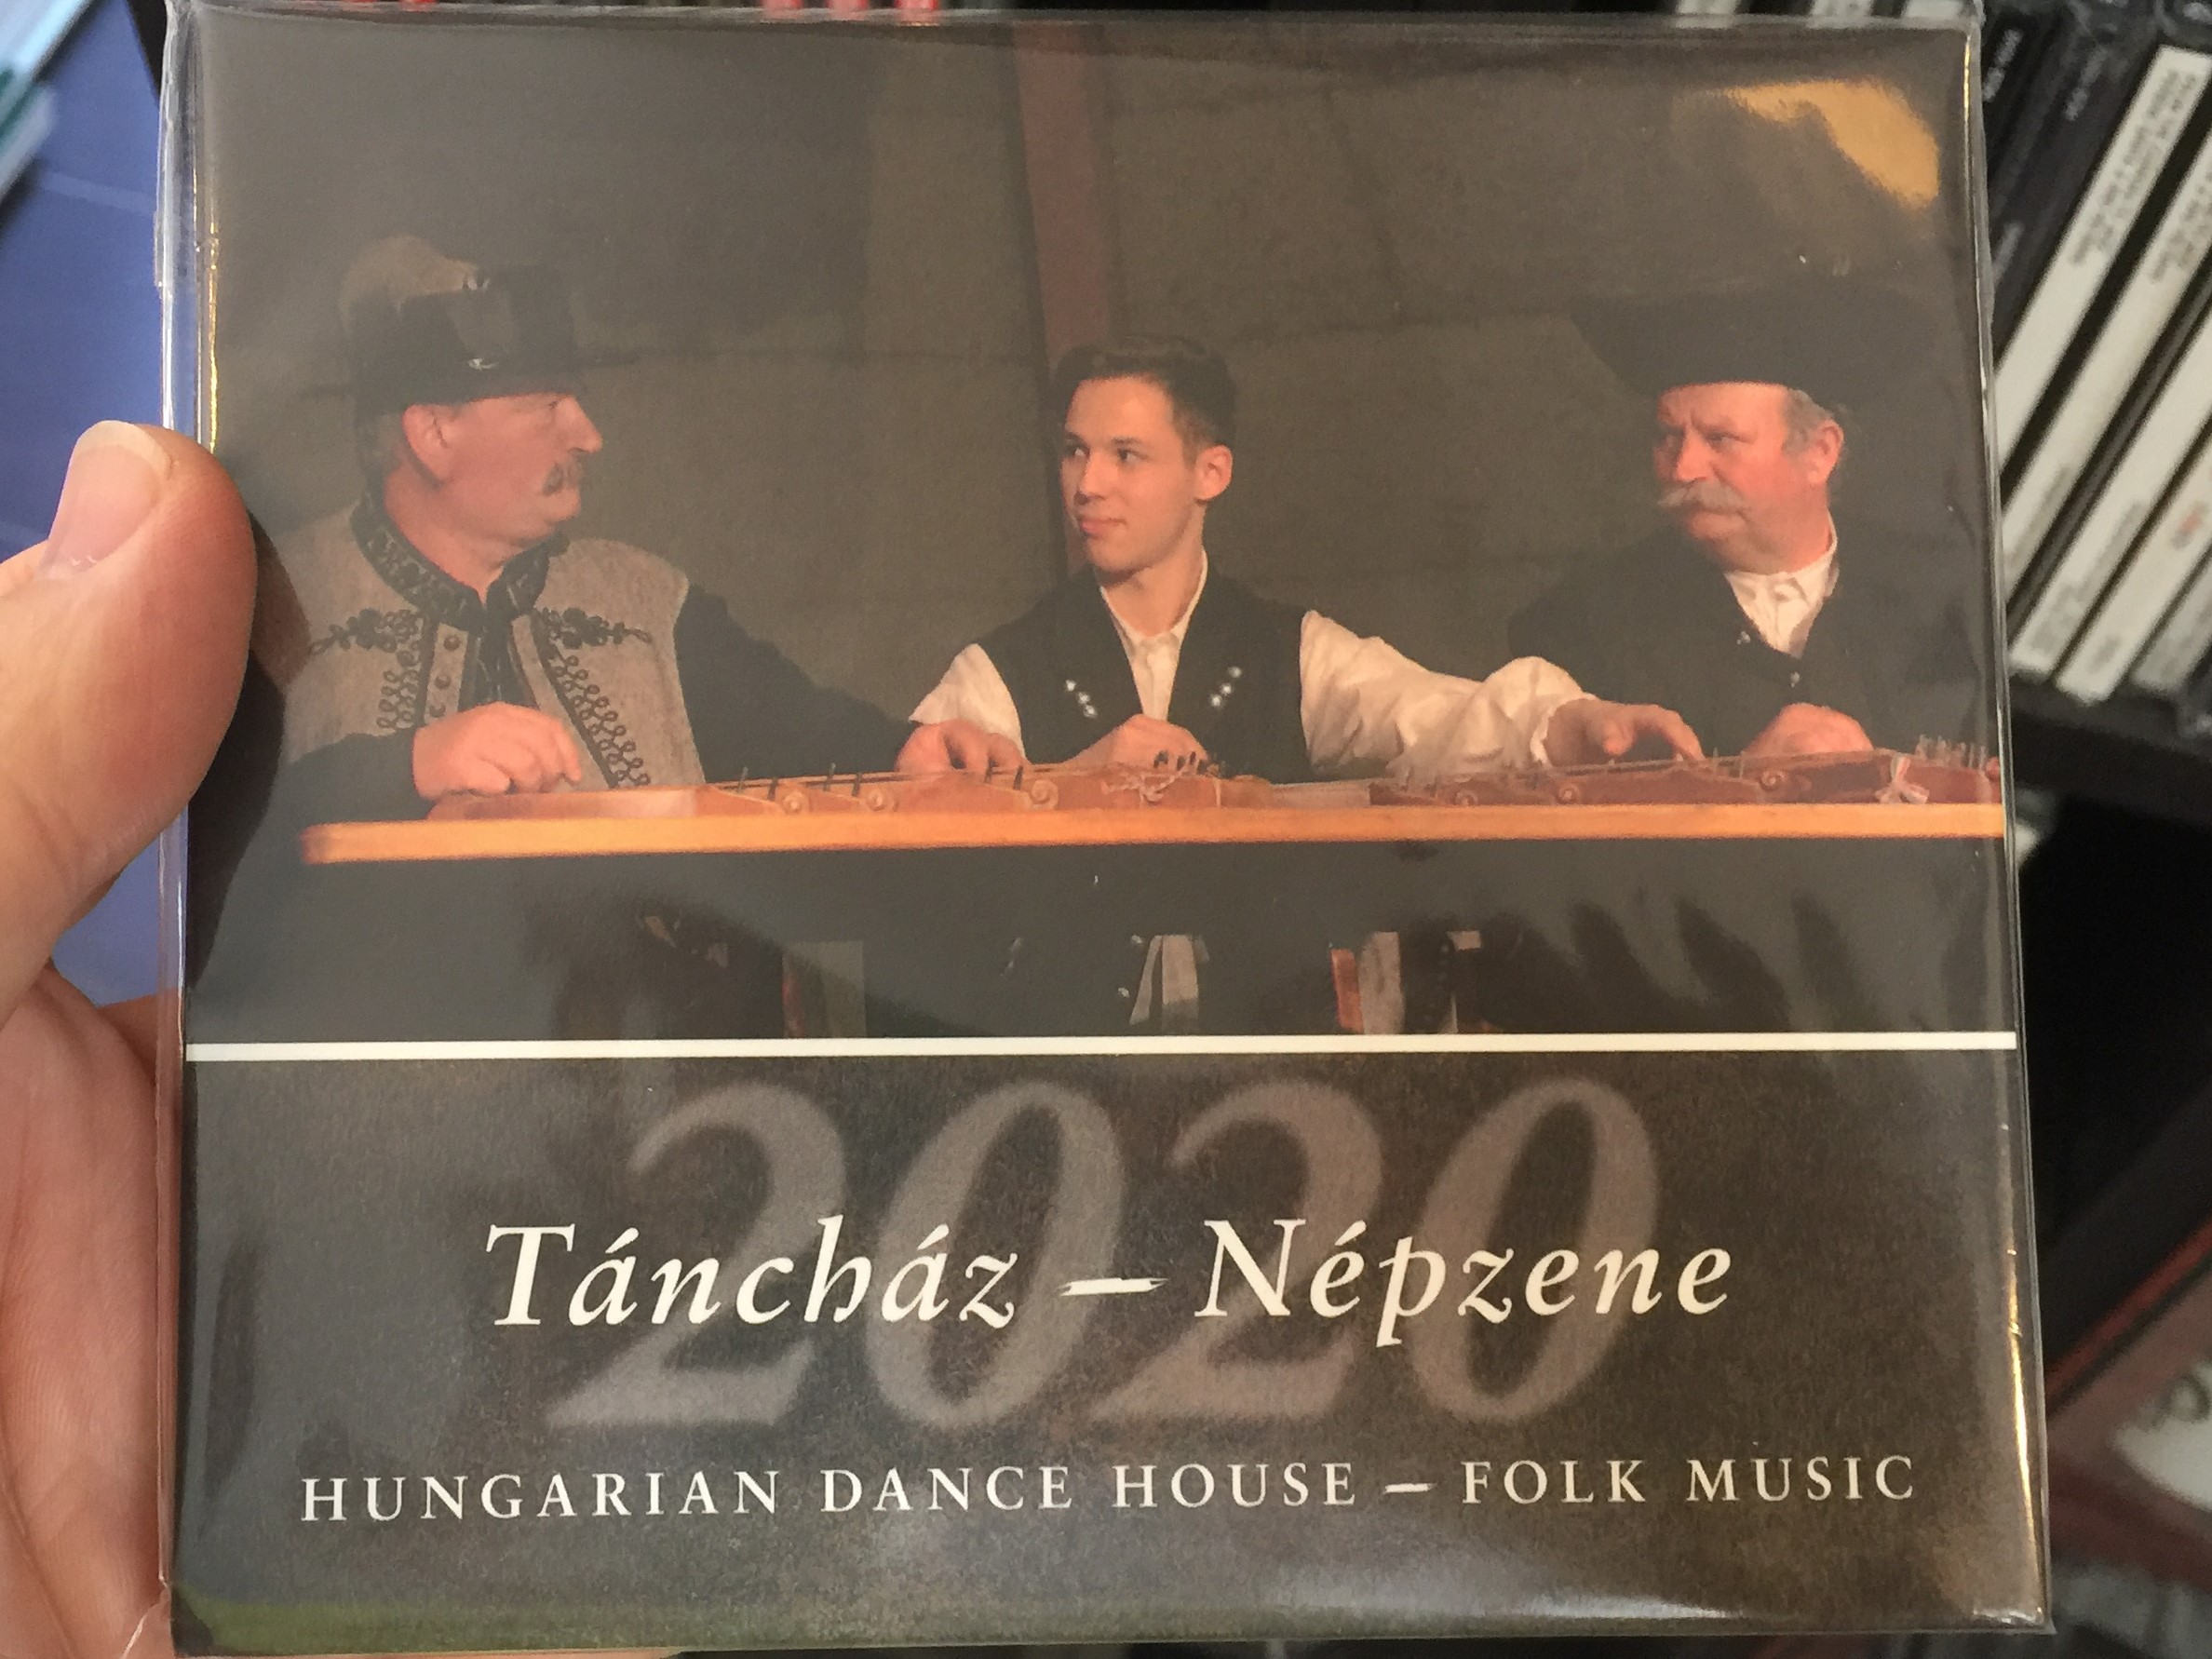 t-nch-z-n-pzene-2020-hungarian-dance-house-folk-music-hagyom-nyok-h-za-audio-cd-2020-5999882041674-1-.jpg